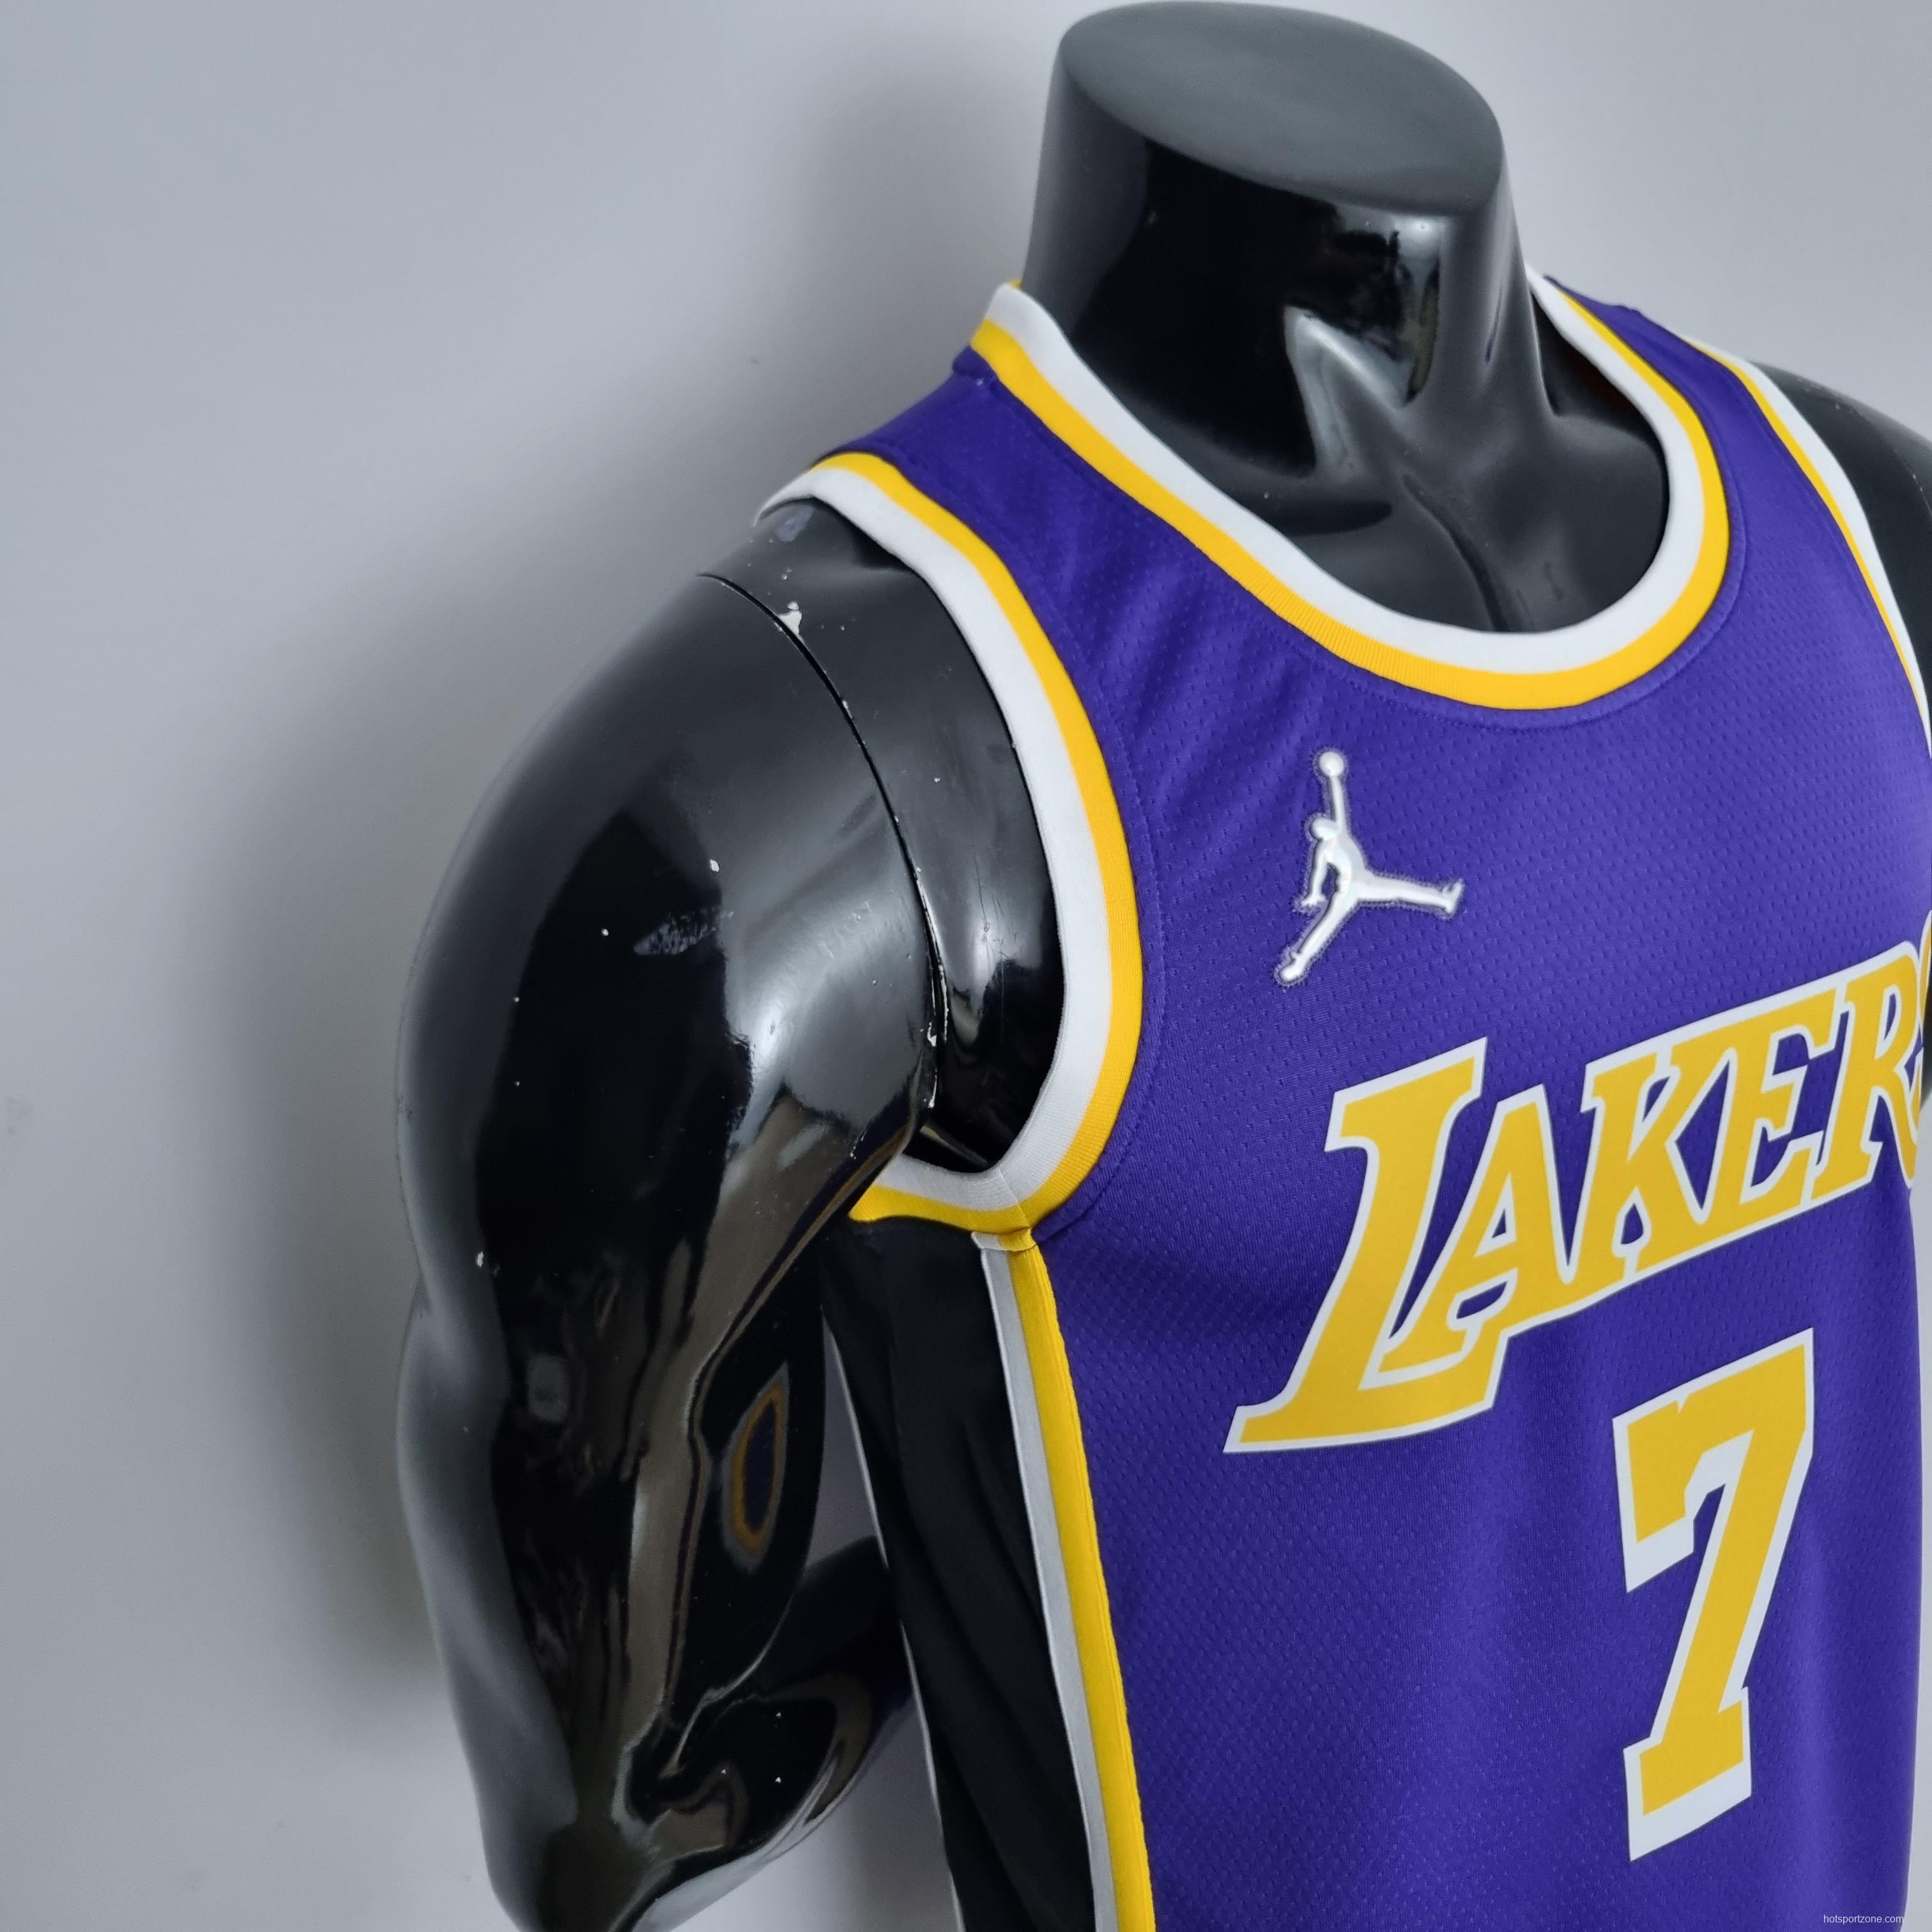 75th Anniversary Anthony #7 Los Angeles Lakers Jordan Purple NBA Jersey